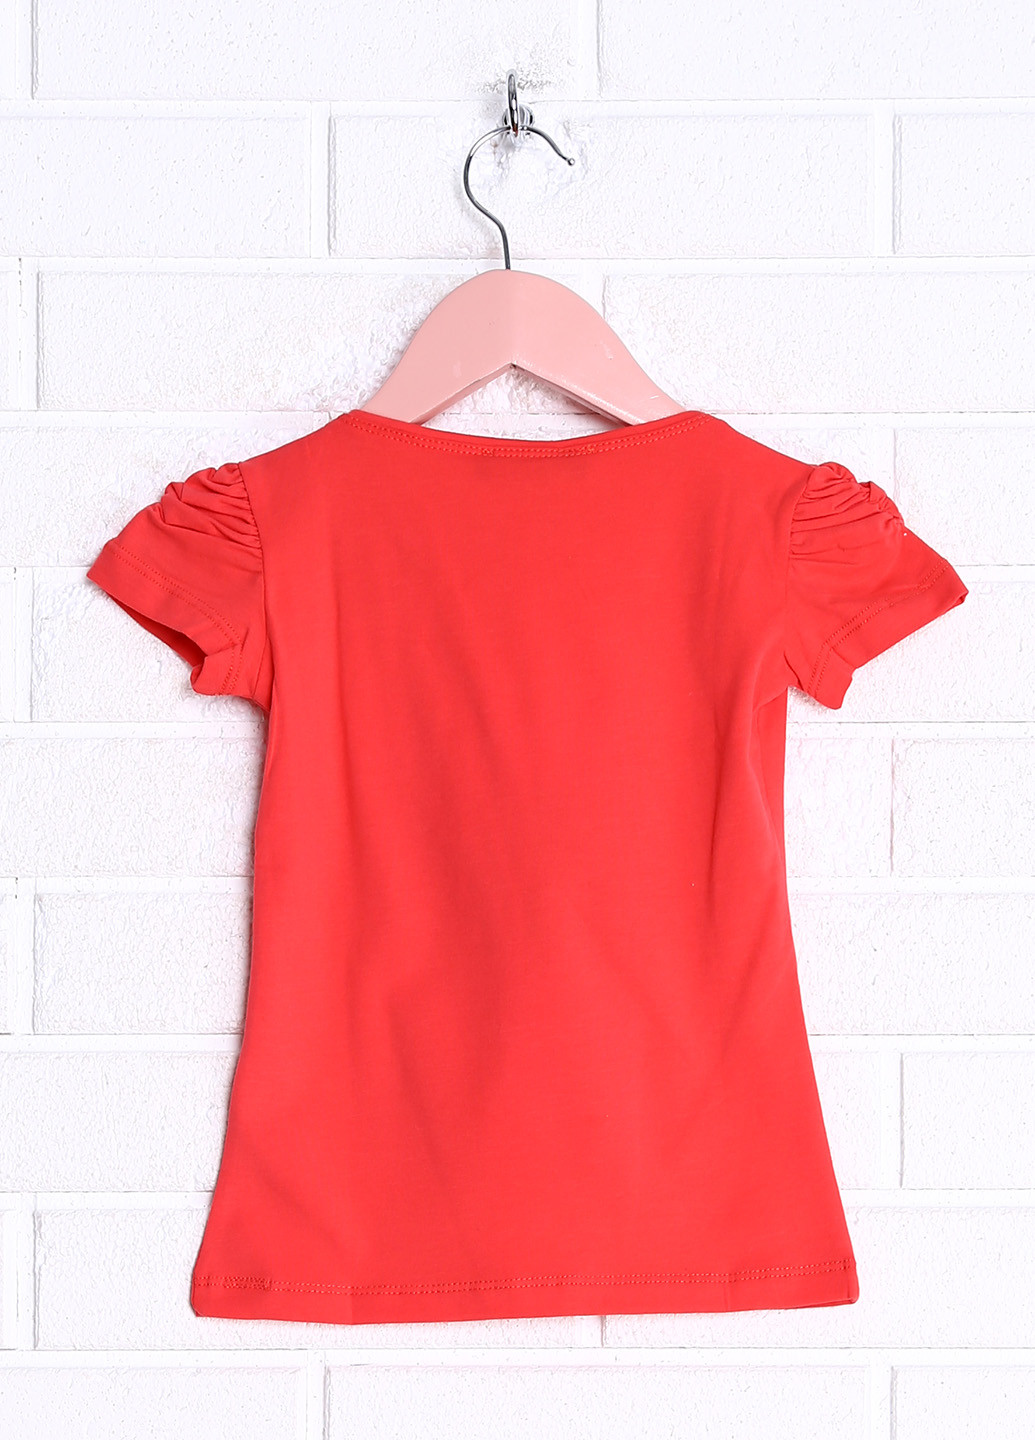 Красная летняя футболка с коротким рукавом Almis